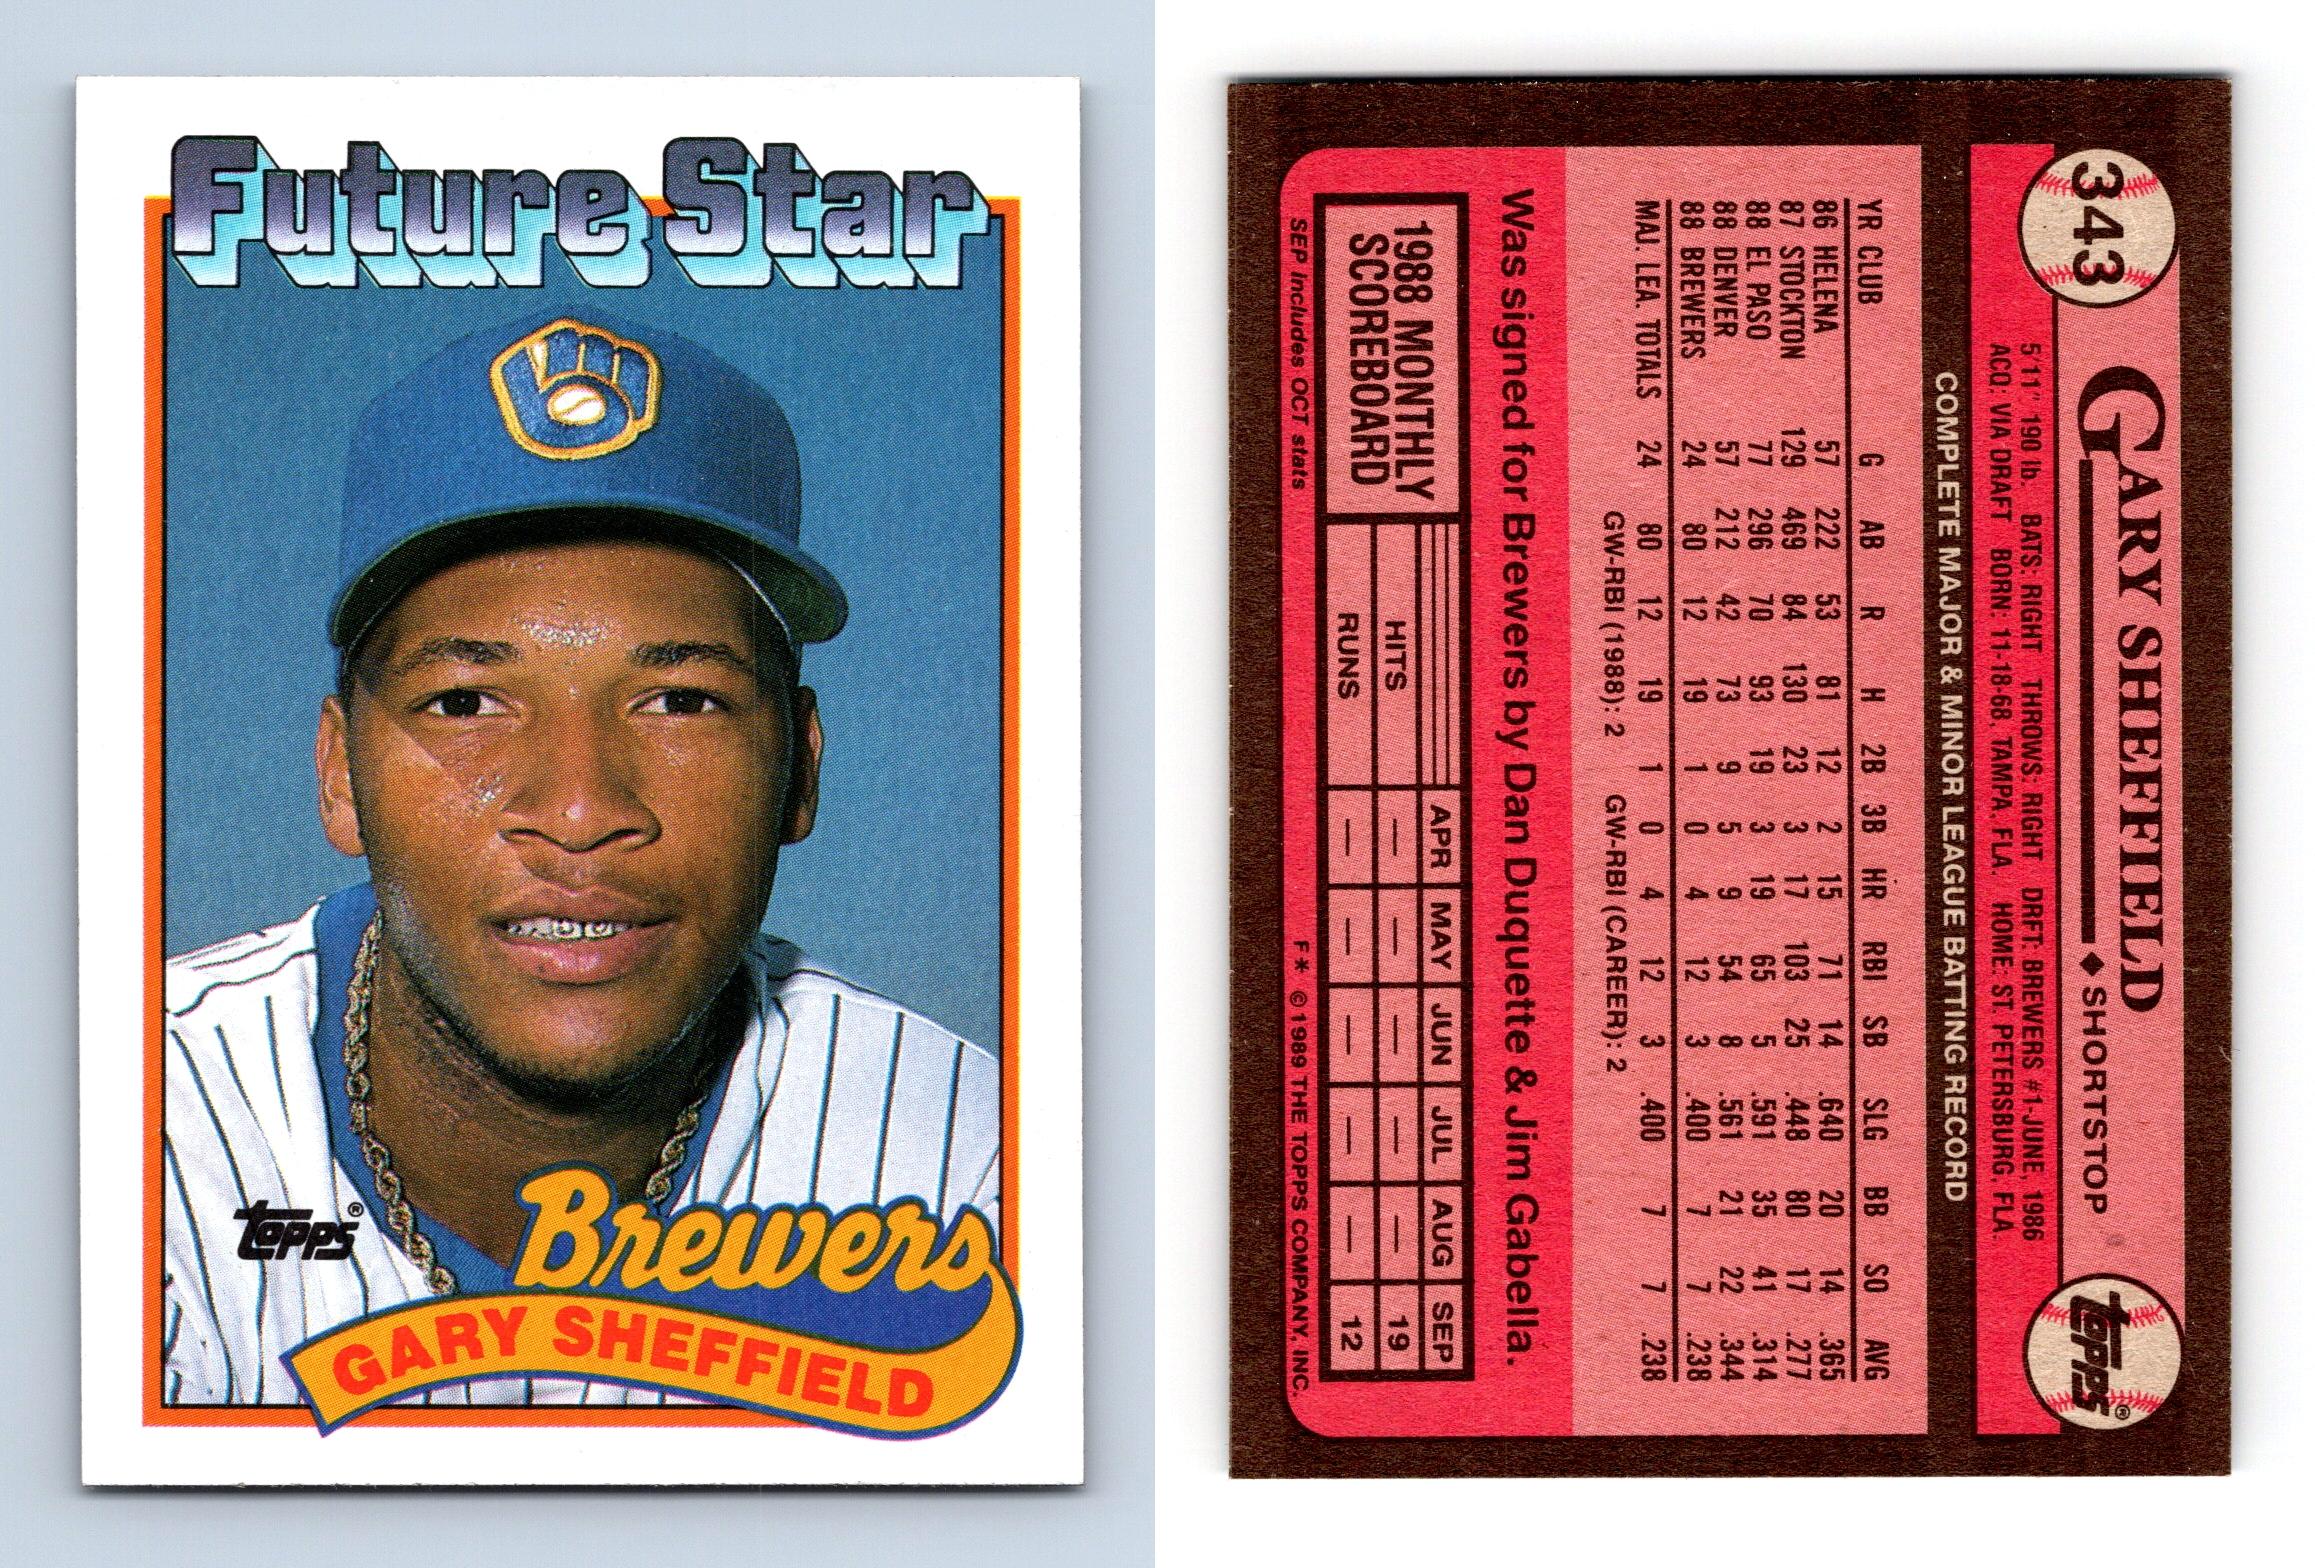 Gary Sheffield - Brewers #343 Topps 1989 Baseball RC Trading Card